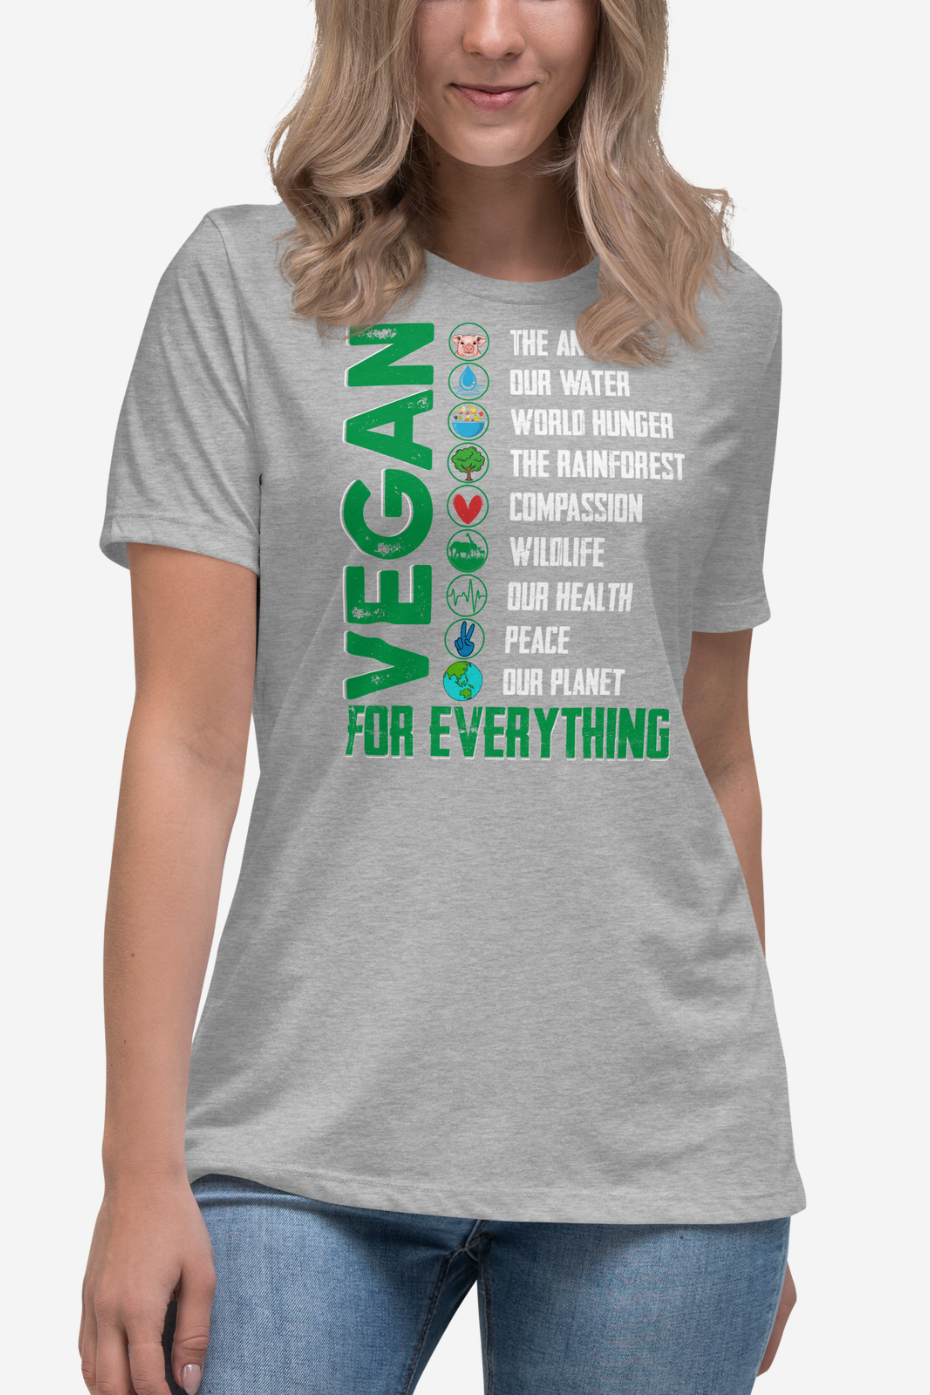 Vegan For Everything Women's Relaxed T-Shirt